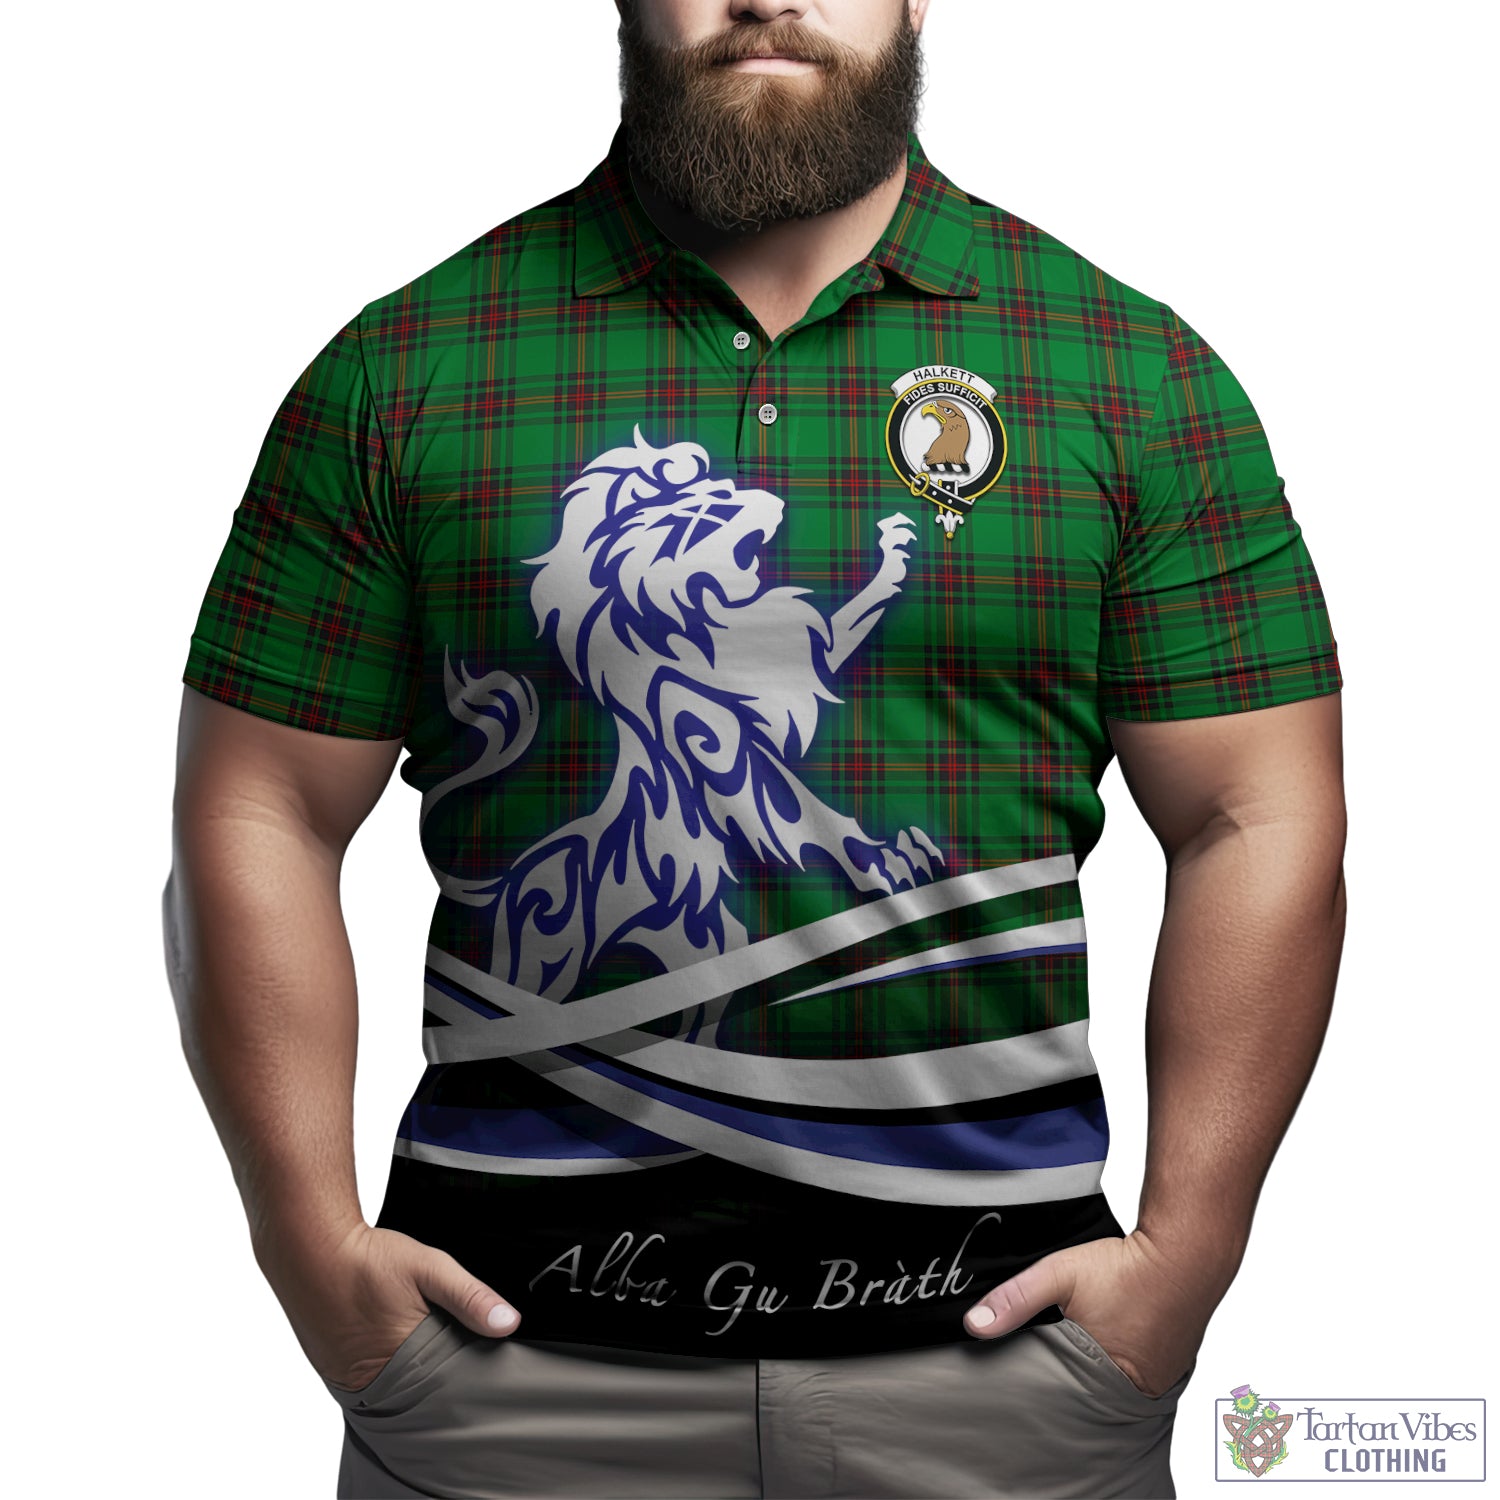 halkett-tartan-polo-shirt-with-alba-gu-brath-regal-lion-emblem